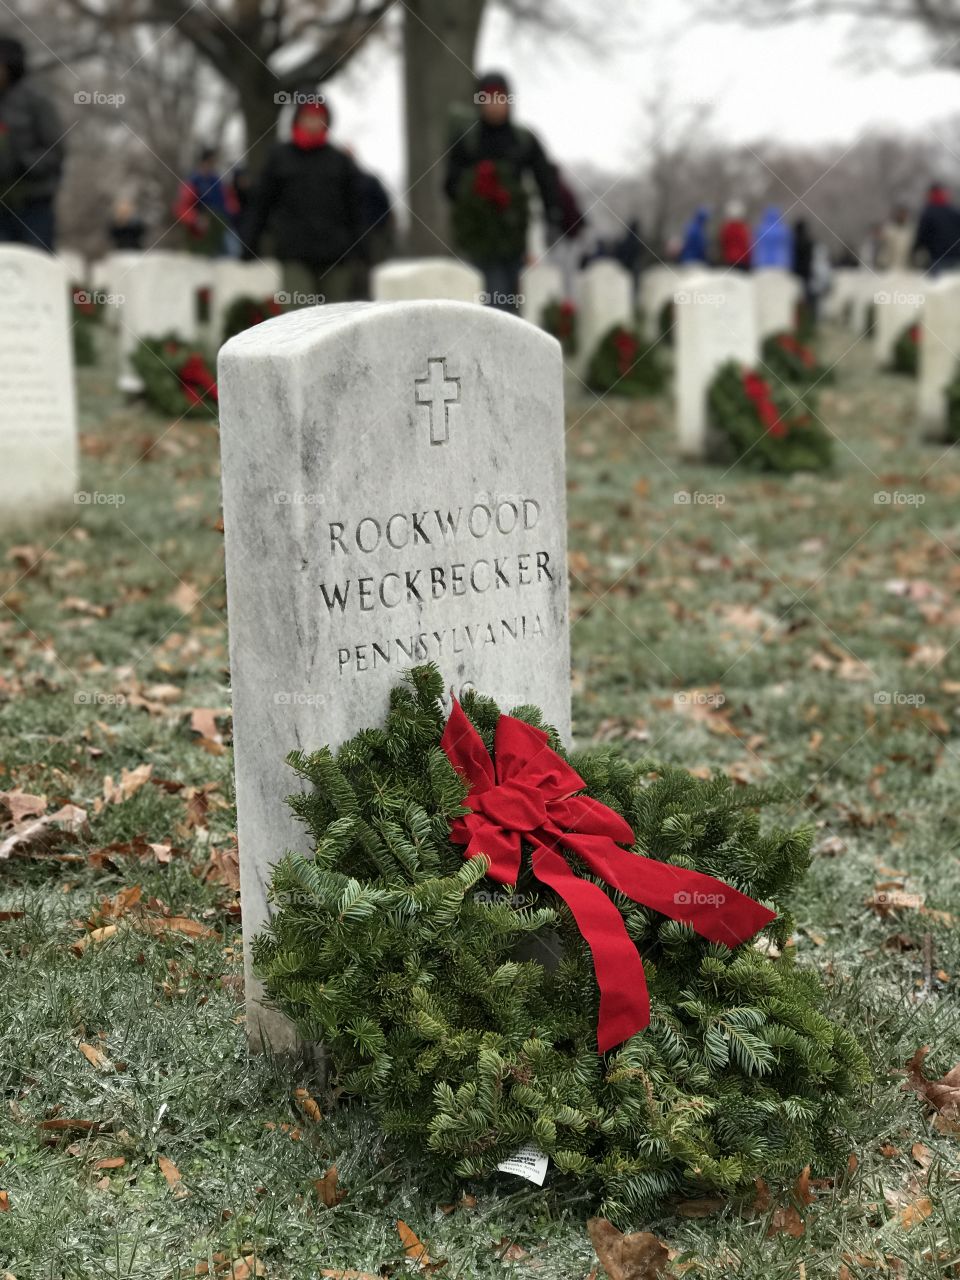 Arlington National Cemetery (Wreaths Across America), Arlington, VA - December 17, 2016